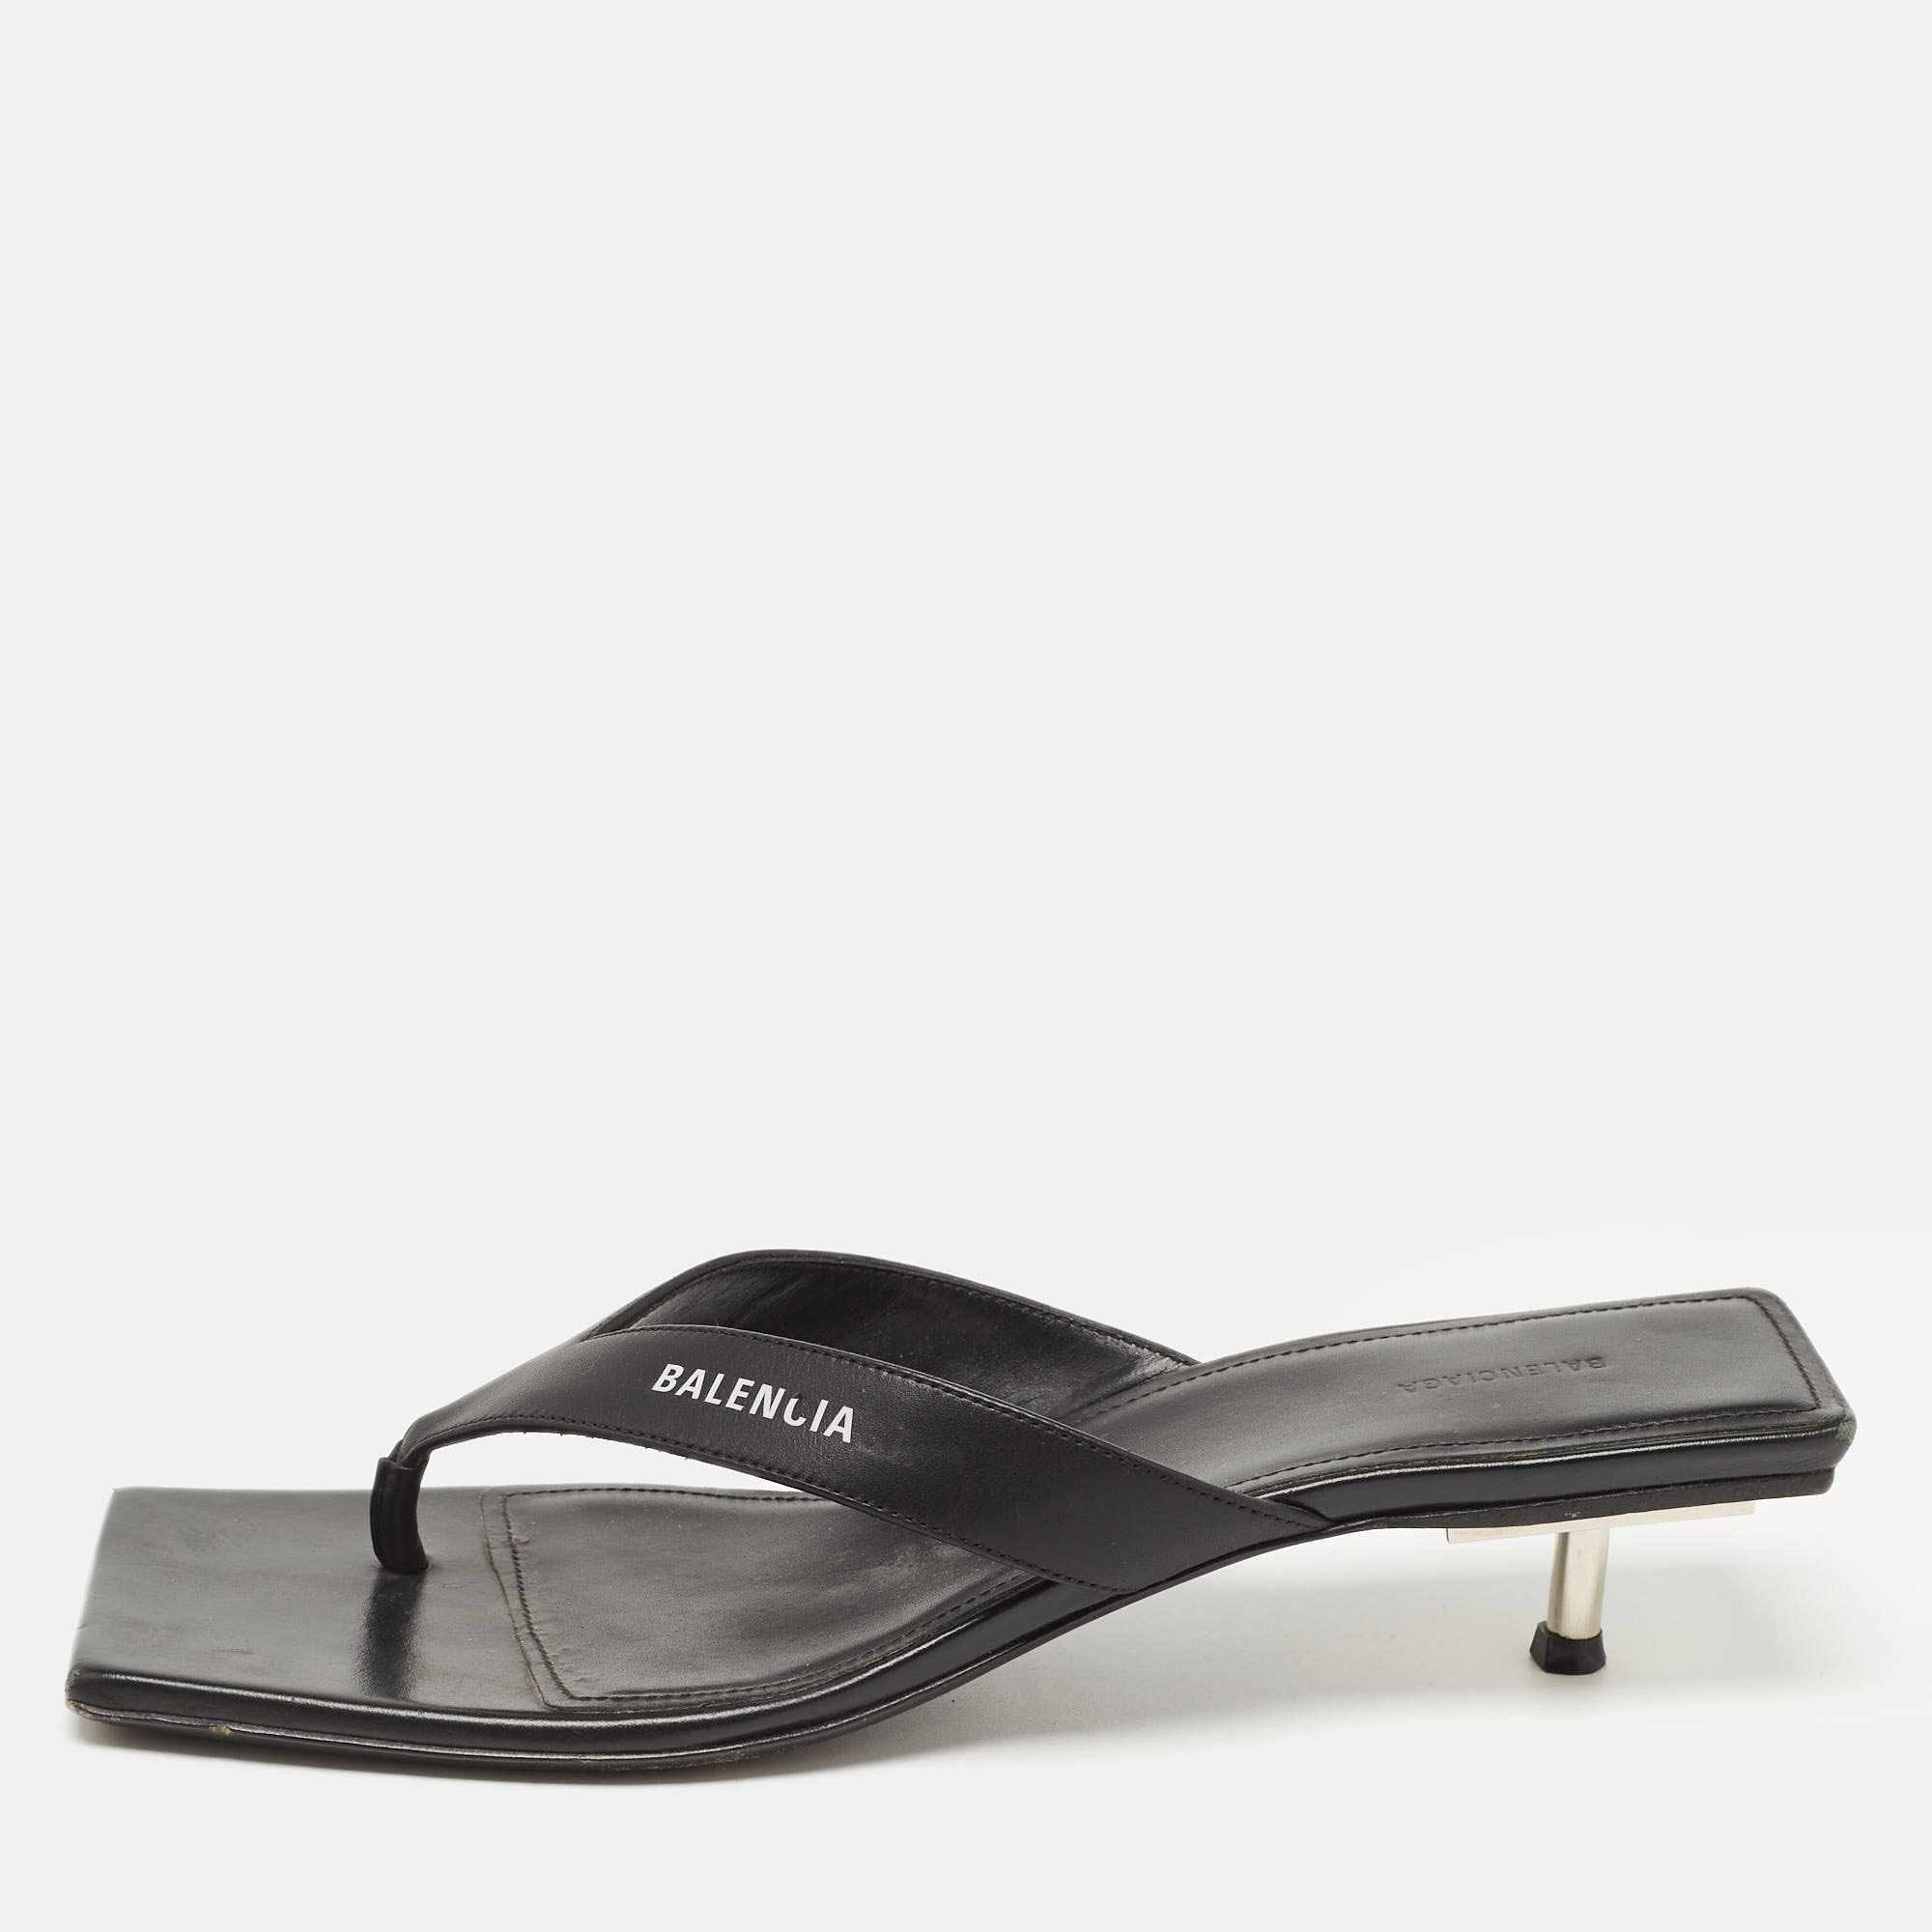 

Balenciaga Black Leather Square Toe Thong Slide Sandals Size